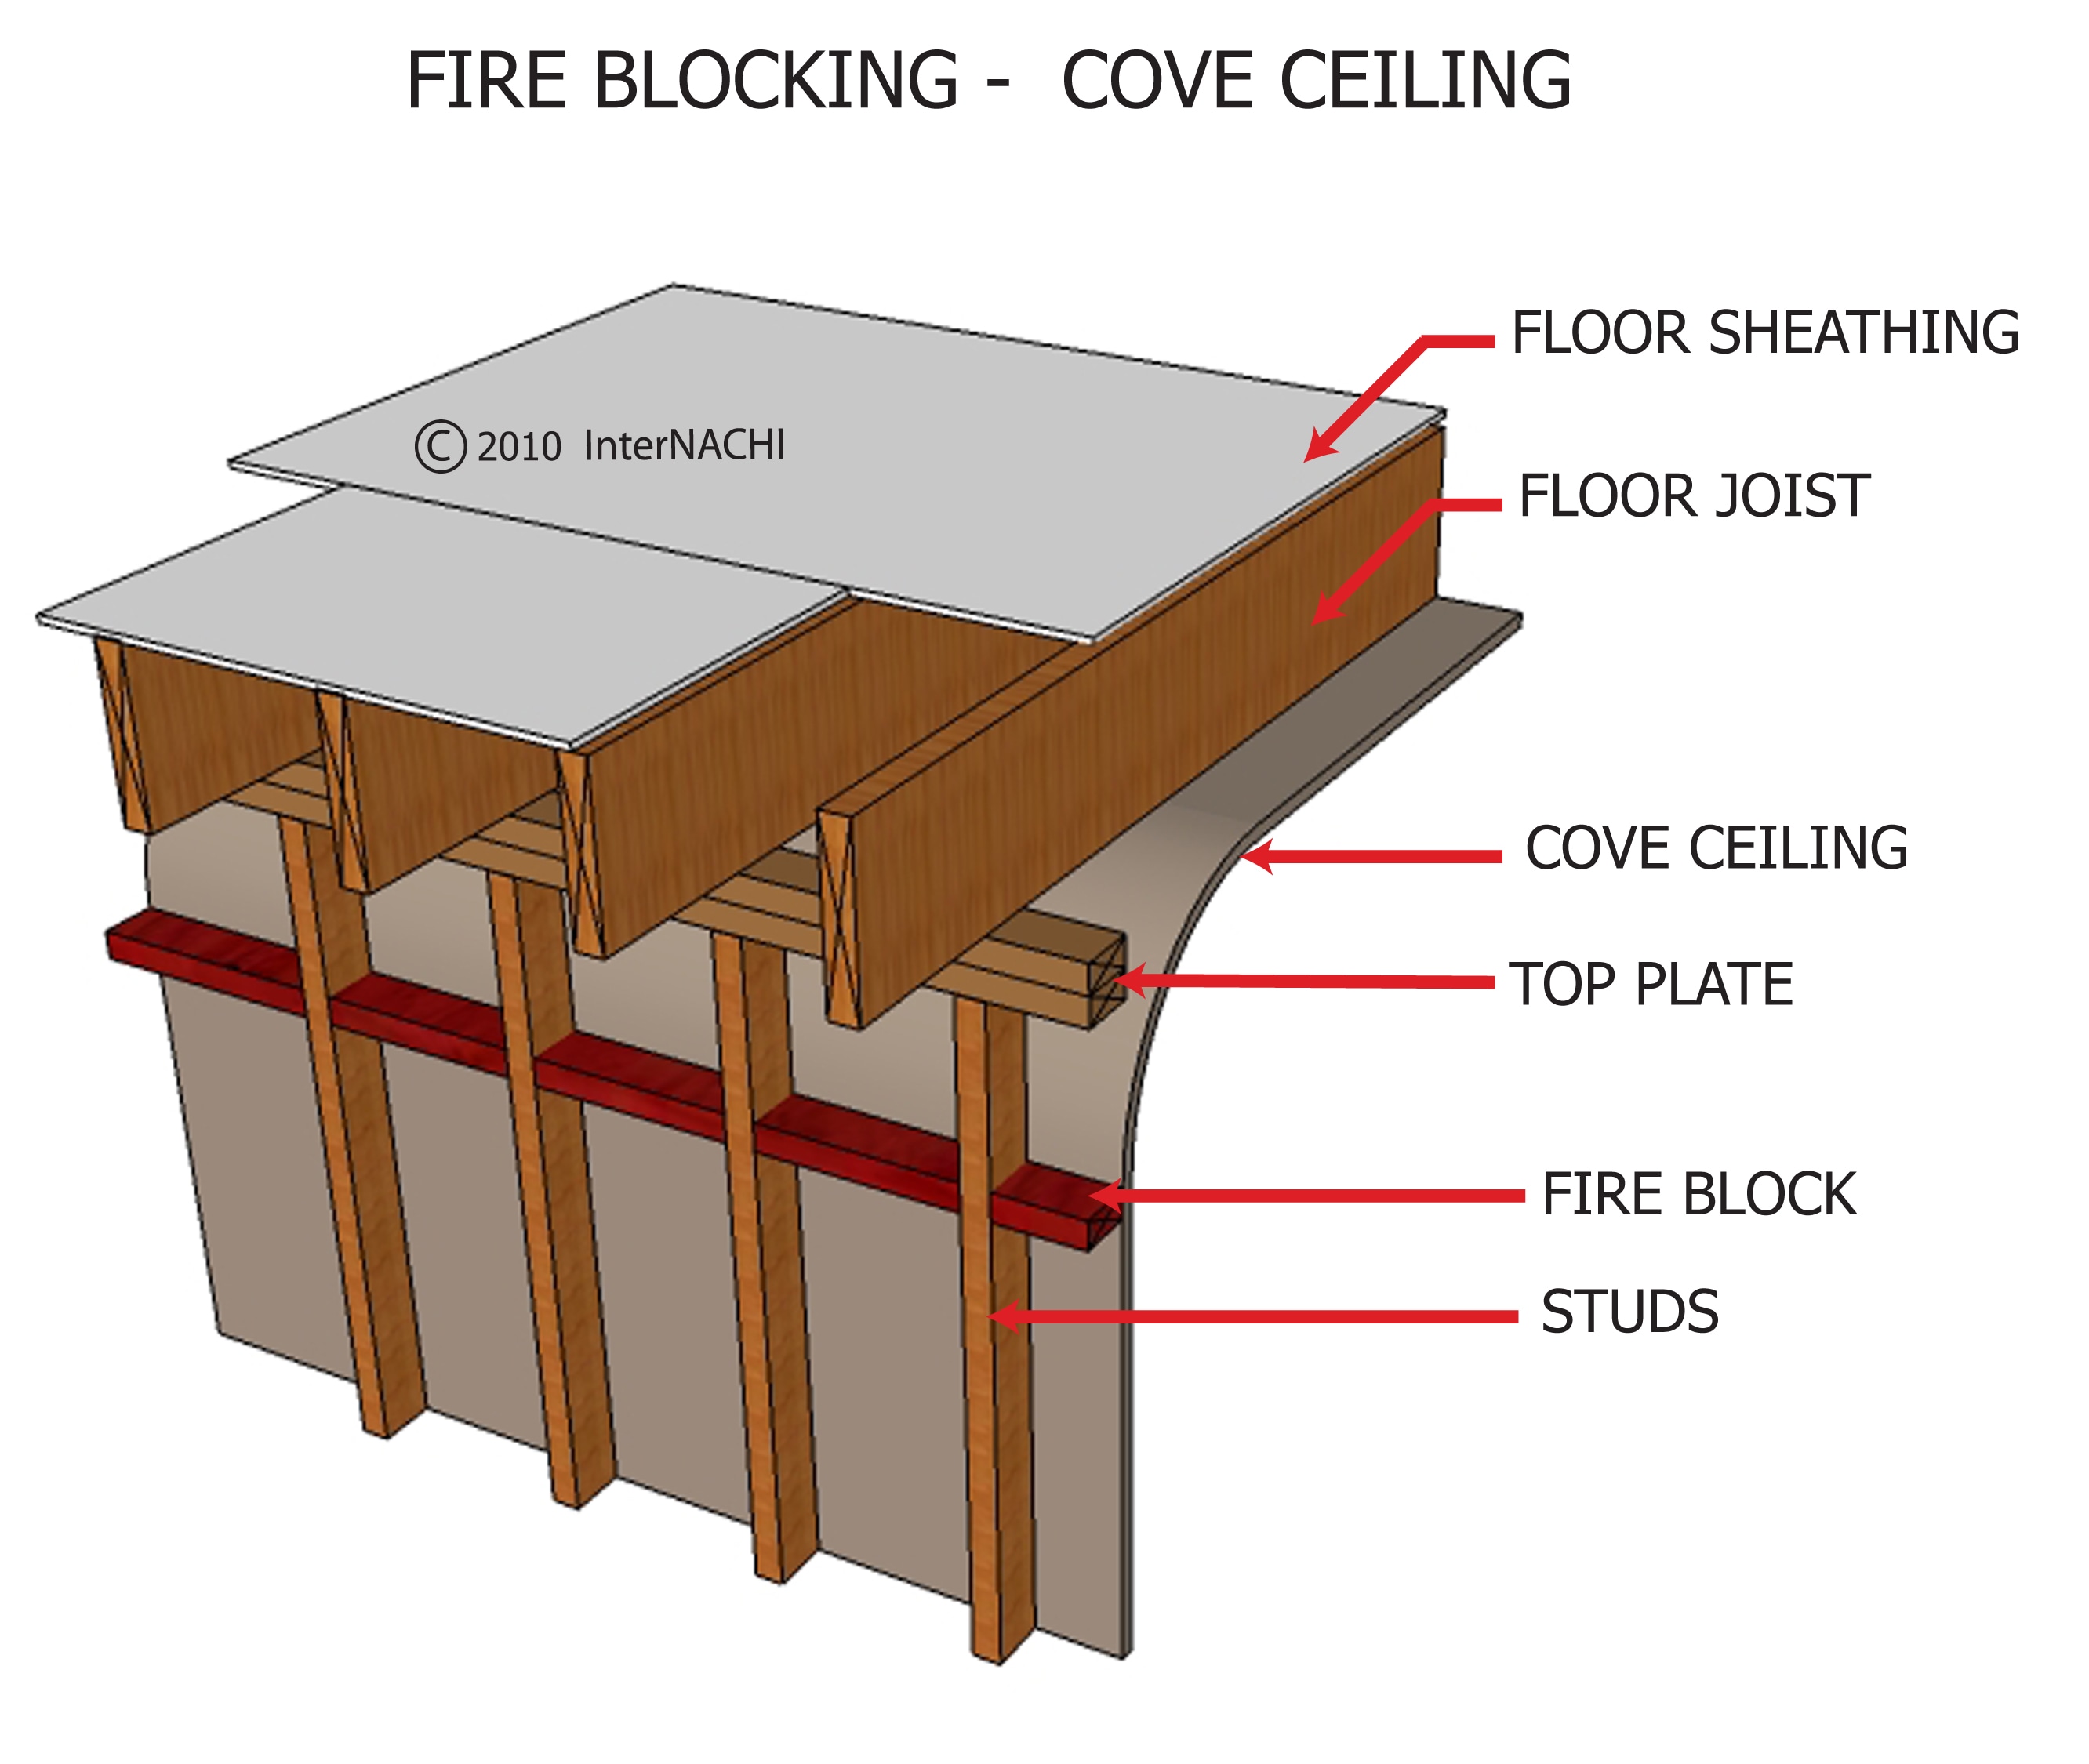 Fire blocking - cove ceiling.